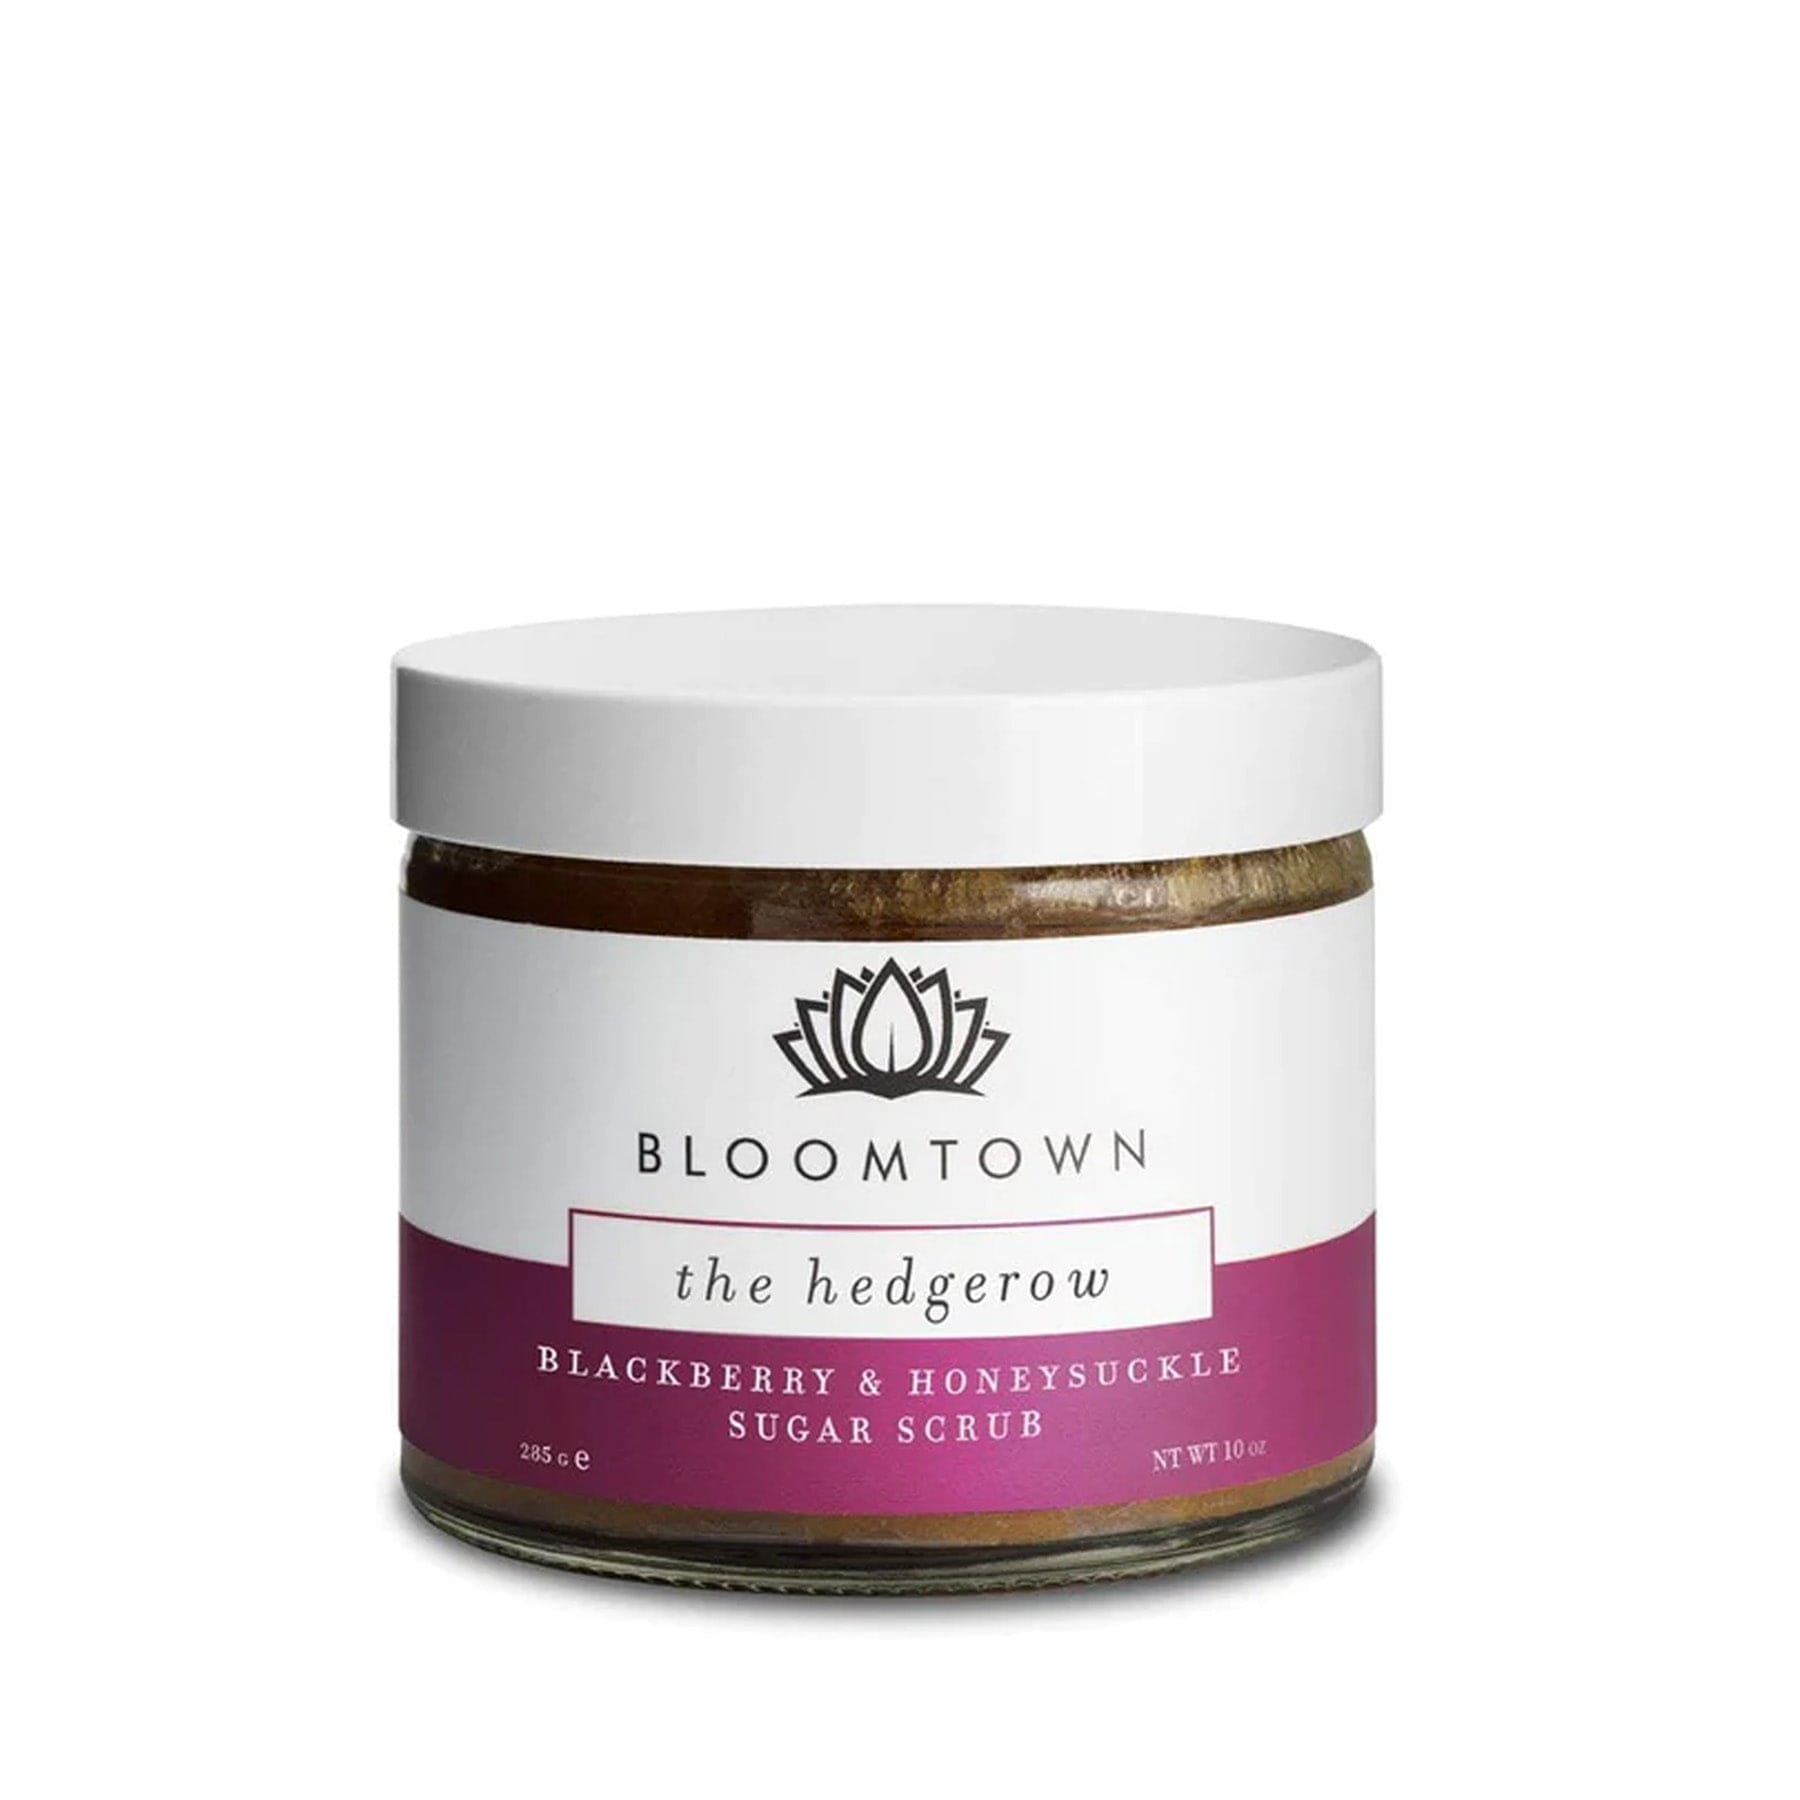 Organic Bloomtown The Hedgerow Blackberry & Honeysuckle Sugar Scrub in Jar, Natural Skincare Product, Vegan Exfoliating Scrub